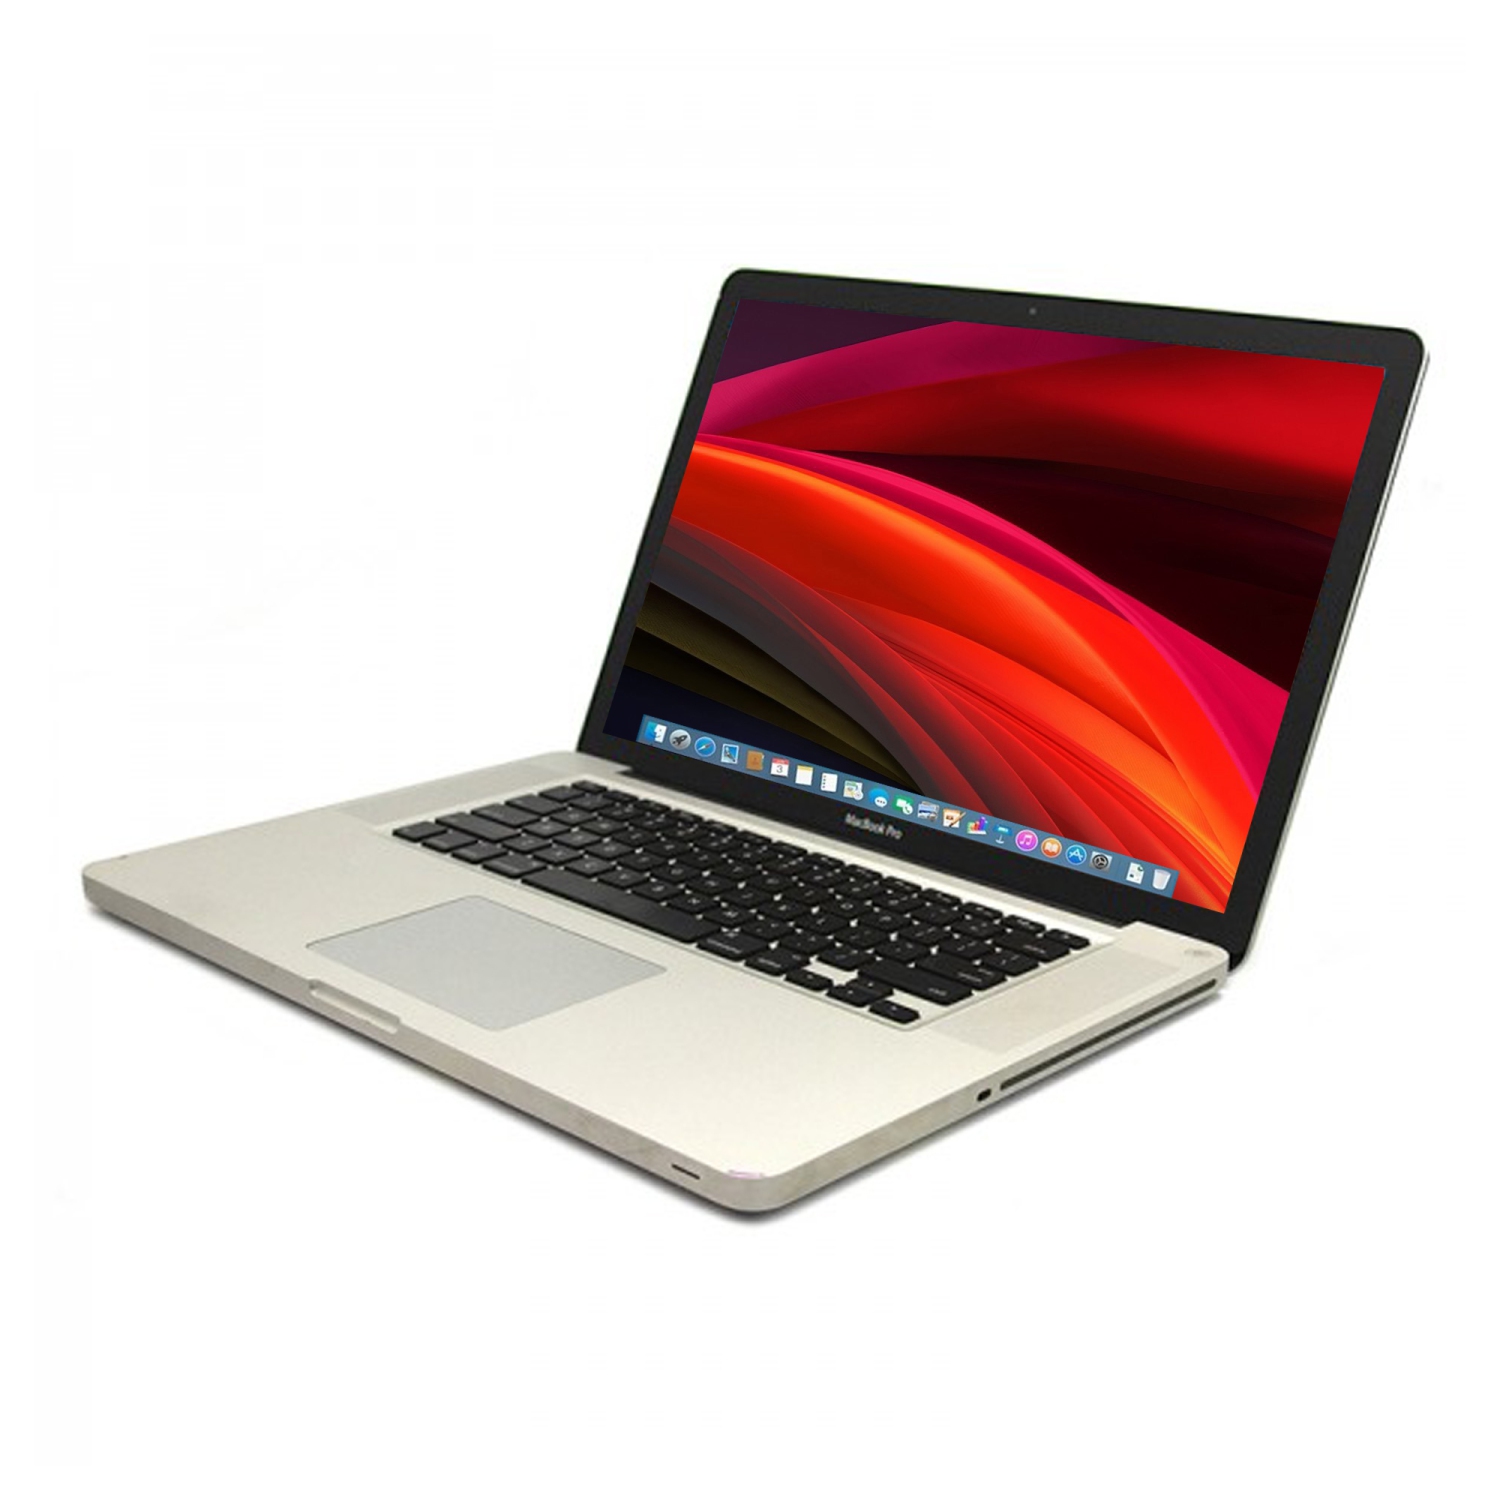 (Refurbished Fair) - Apple MacBook Pro A1286 15.4 inch Laptop |Intel i7 Quad Core Processor |16GB RAM 512GB SSD | MacOS Catalina MD103LL/A